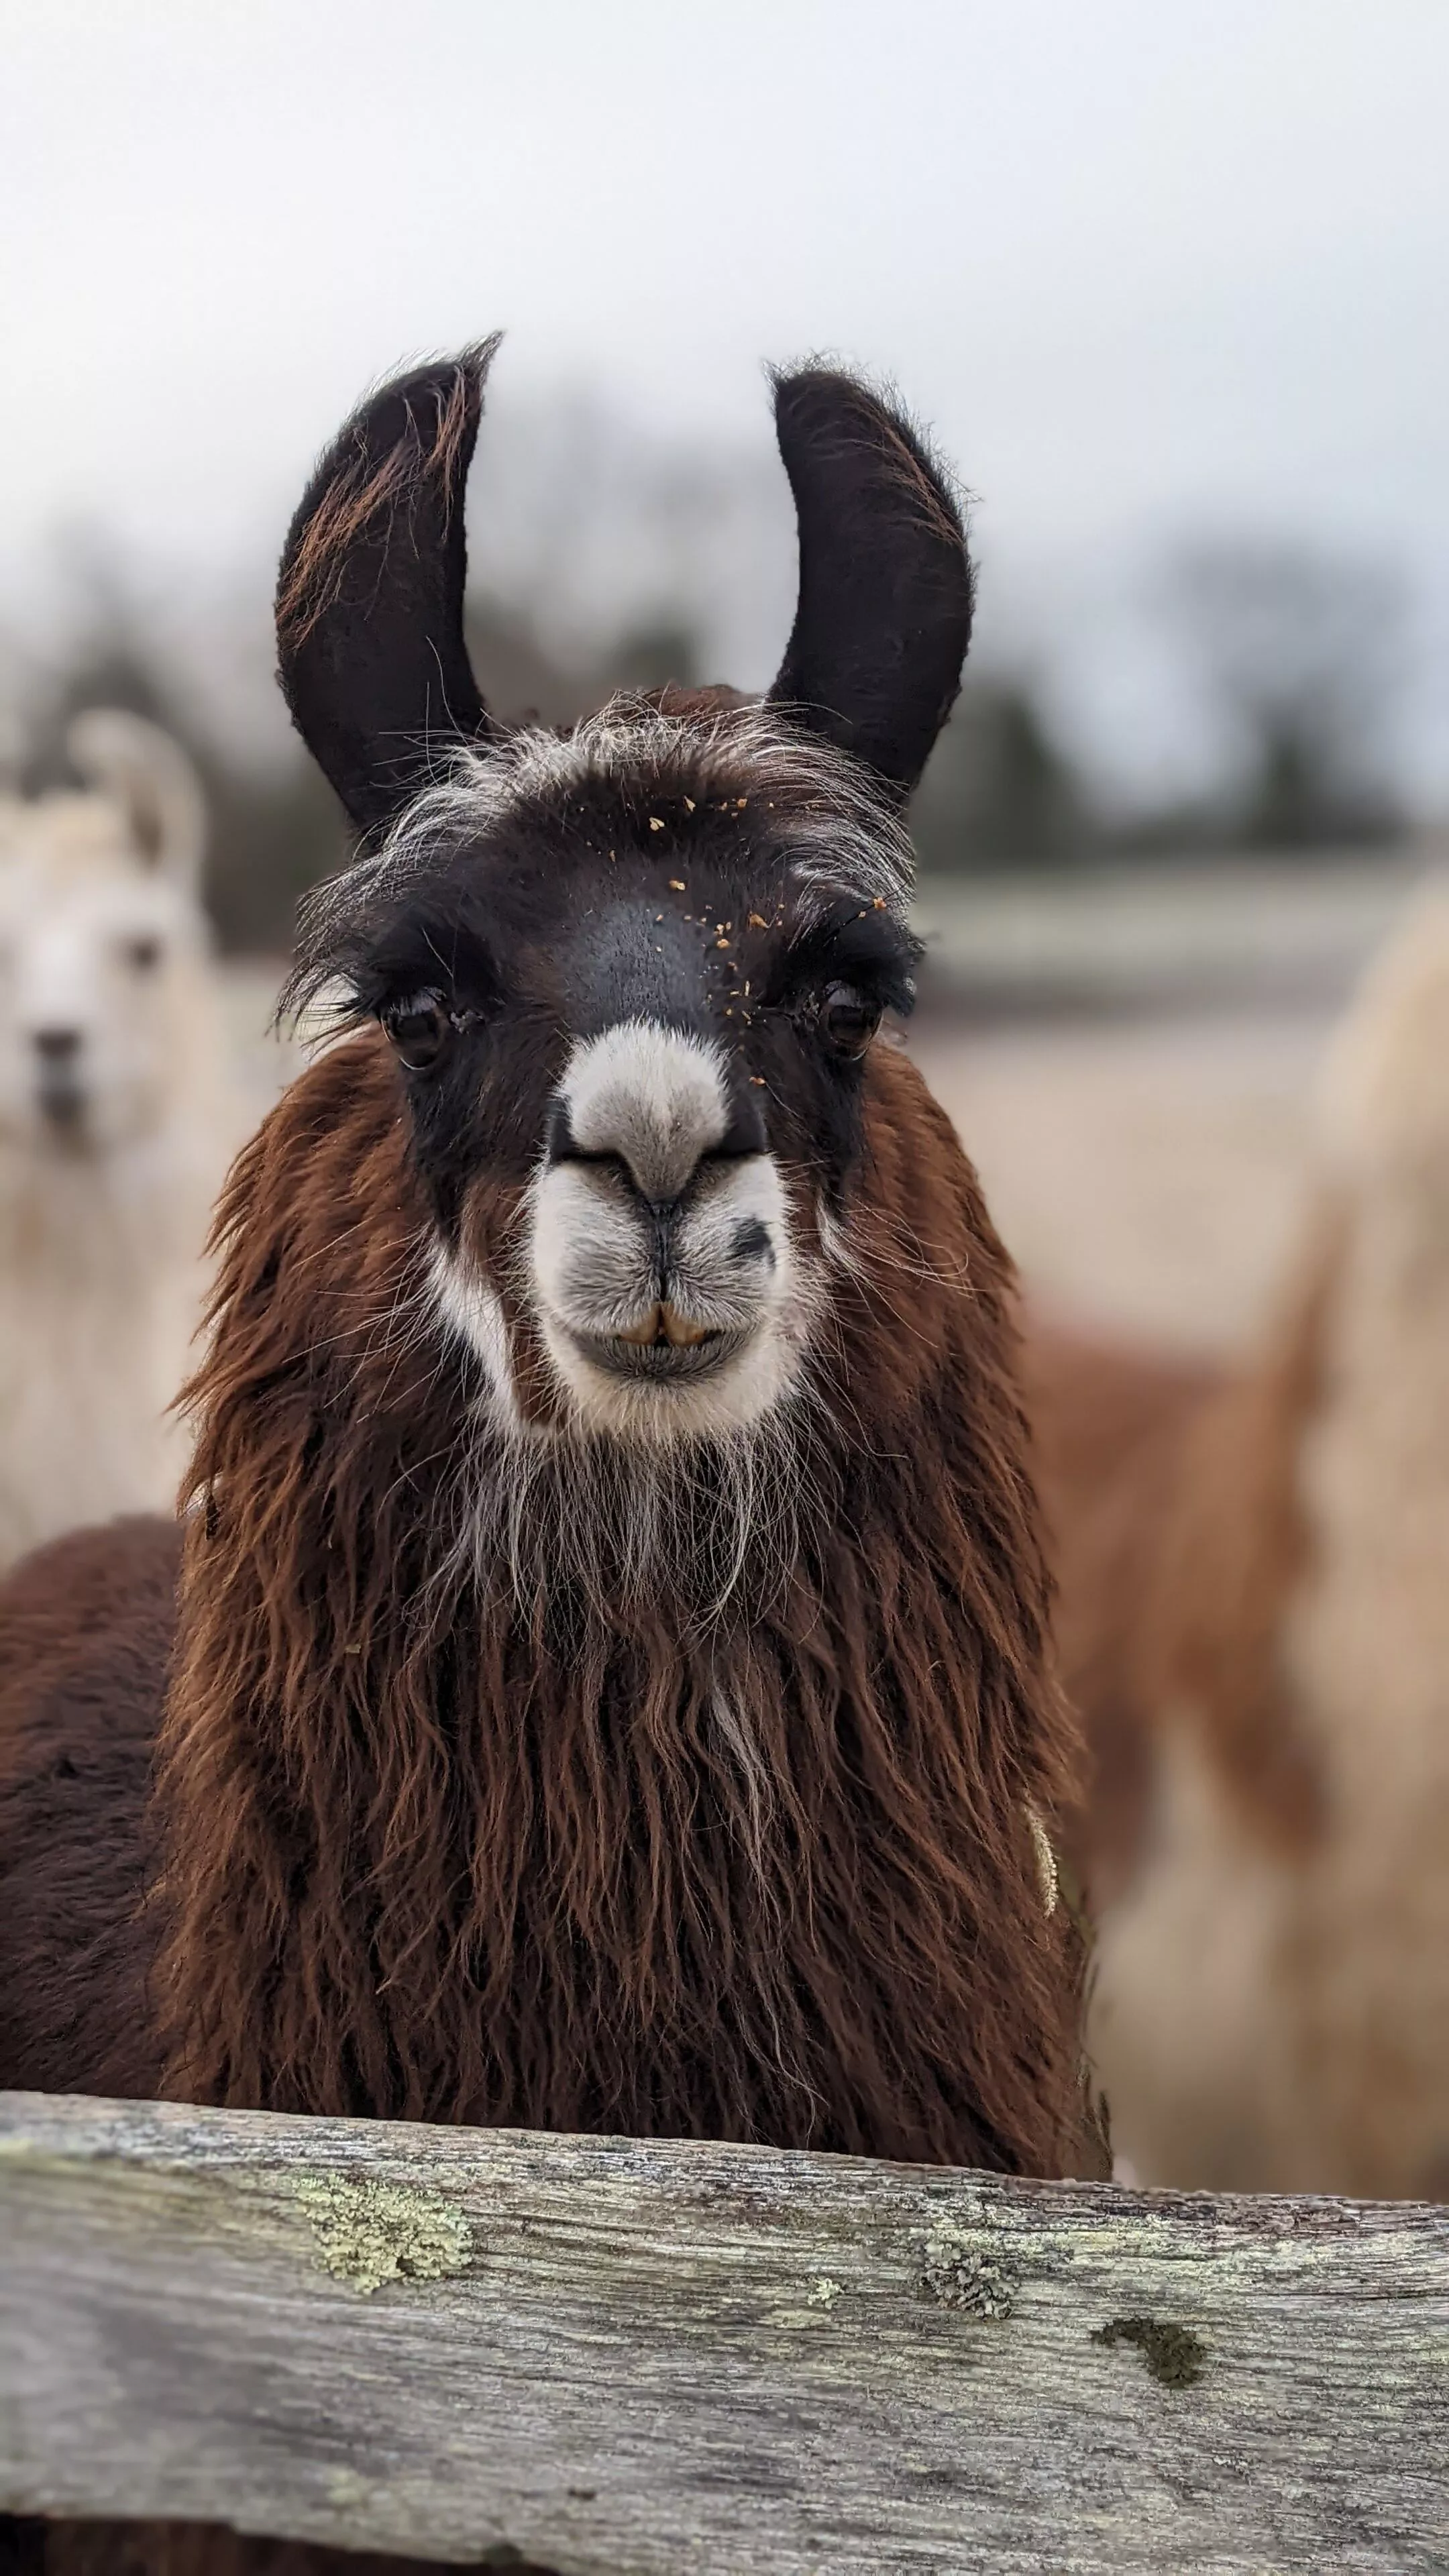 A portrait image of a llama named Jamieson